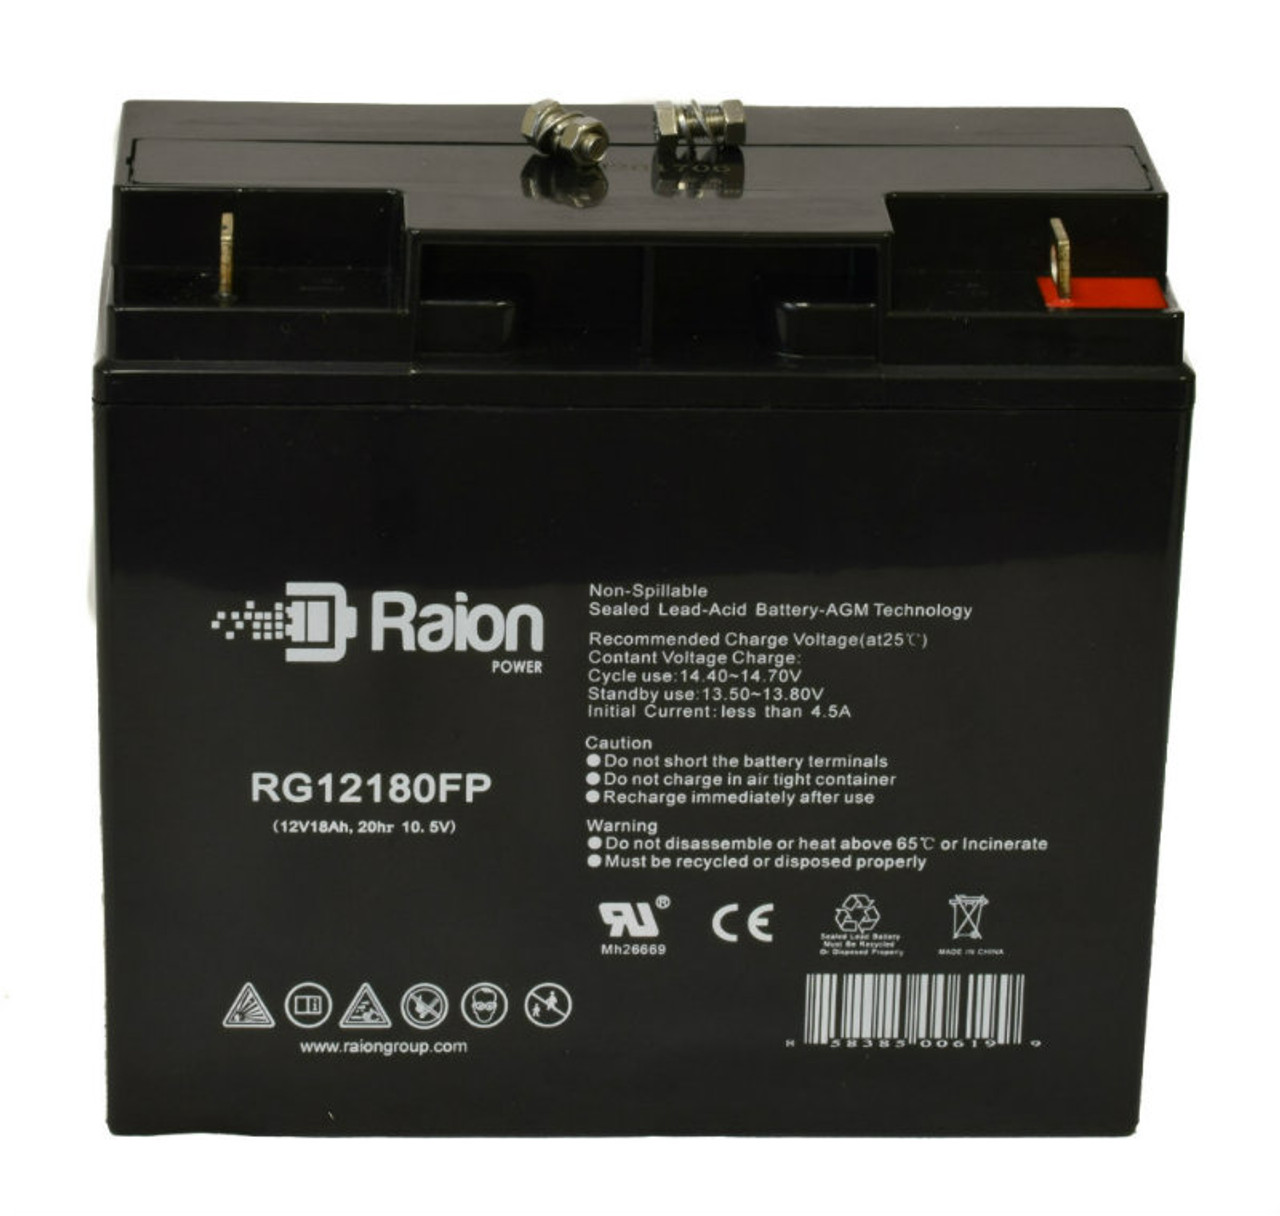 Raion Power RG12180FP 12V 18Ah Lead Acid Battery for Sonnenschein PS12180NB